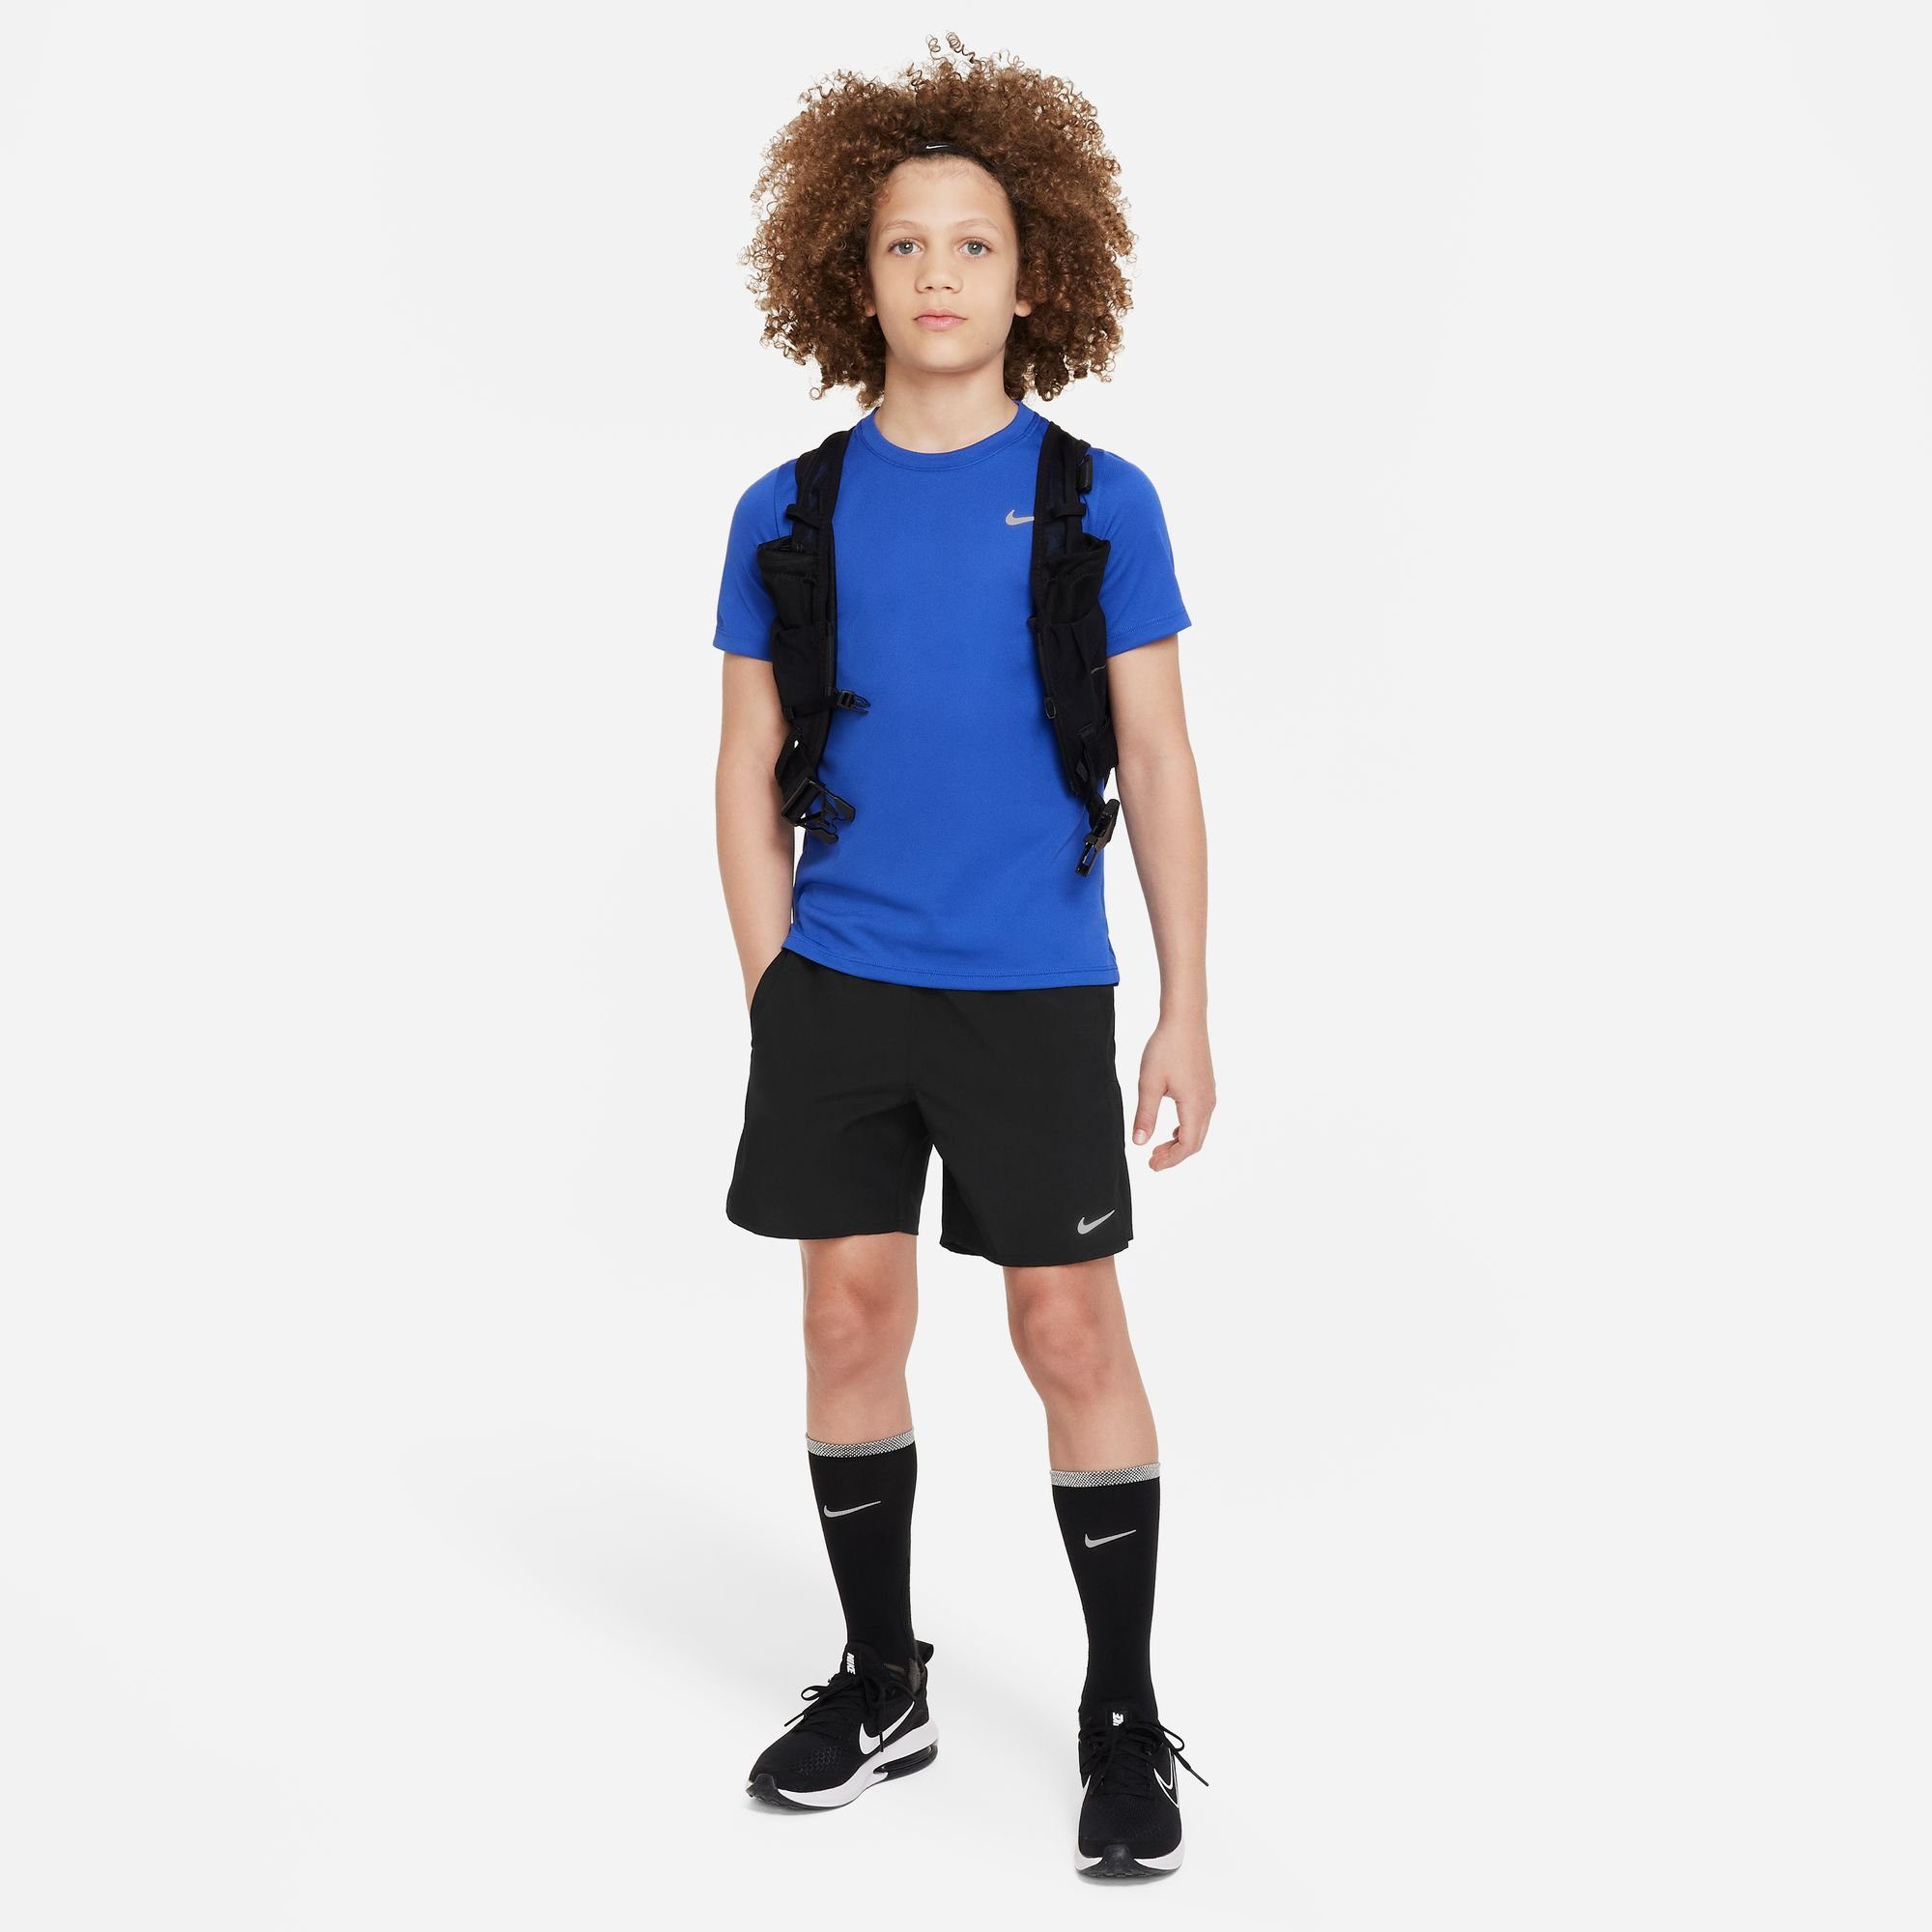 KIDS' TRAINING MILER Nike BIG TOP SHORT-SLEEVE SILV ROYAL/REFLECTIVE GAME DRI-FIT Trainingsshirt (BOYS)